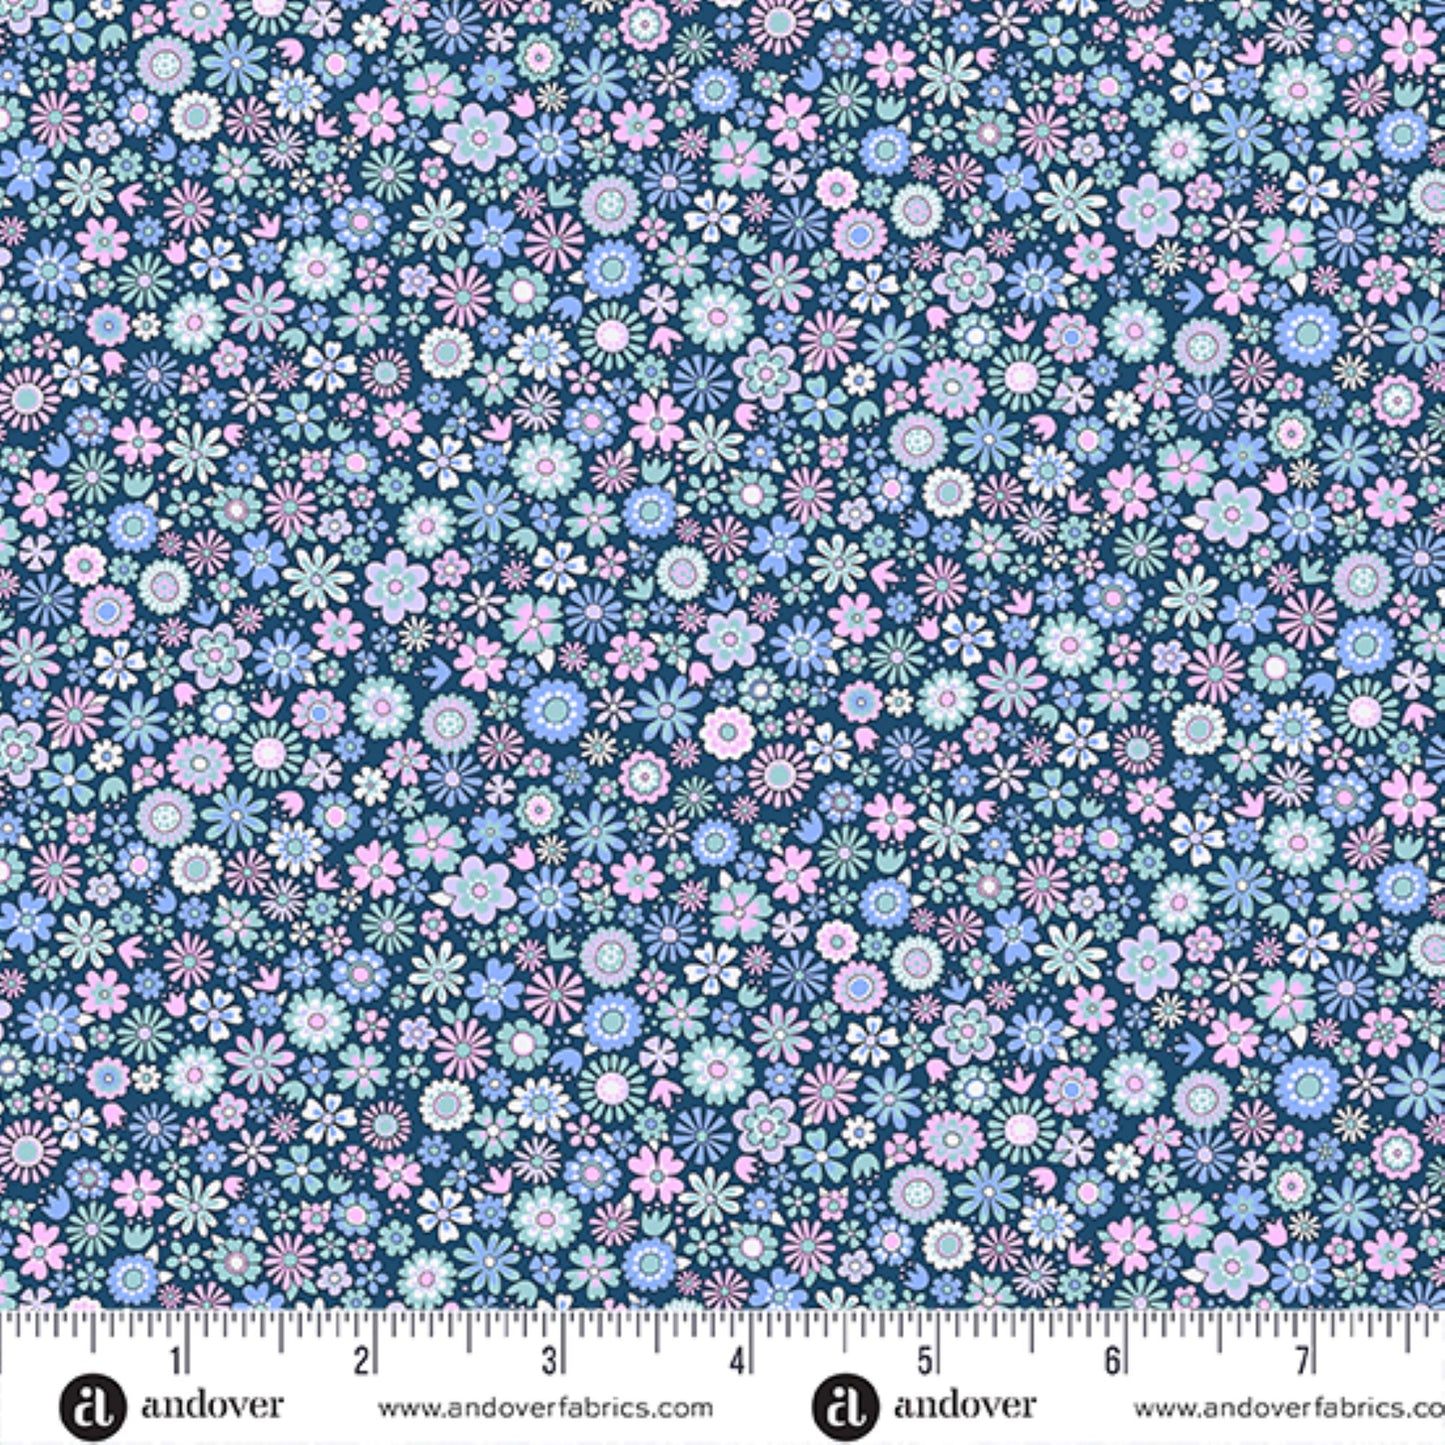 Country Cuttings florals blue lilac bundle - 6 Fat Quarters cotton quilt fabric by Makower UK